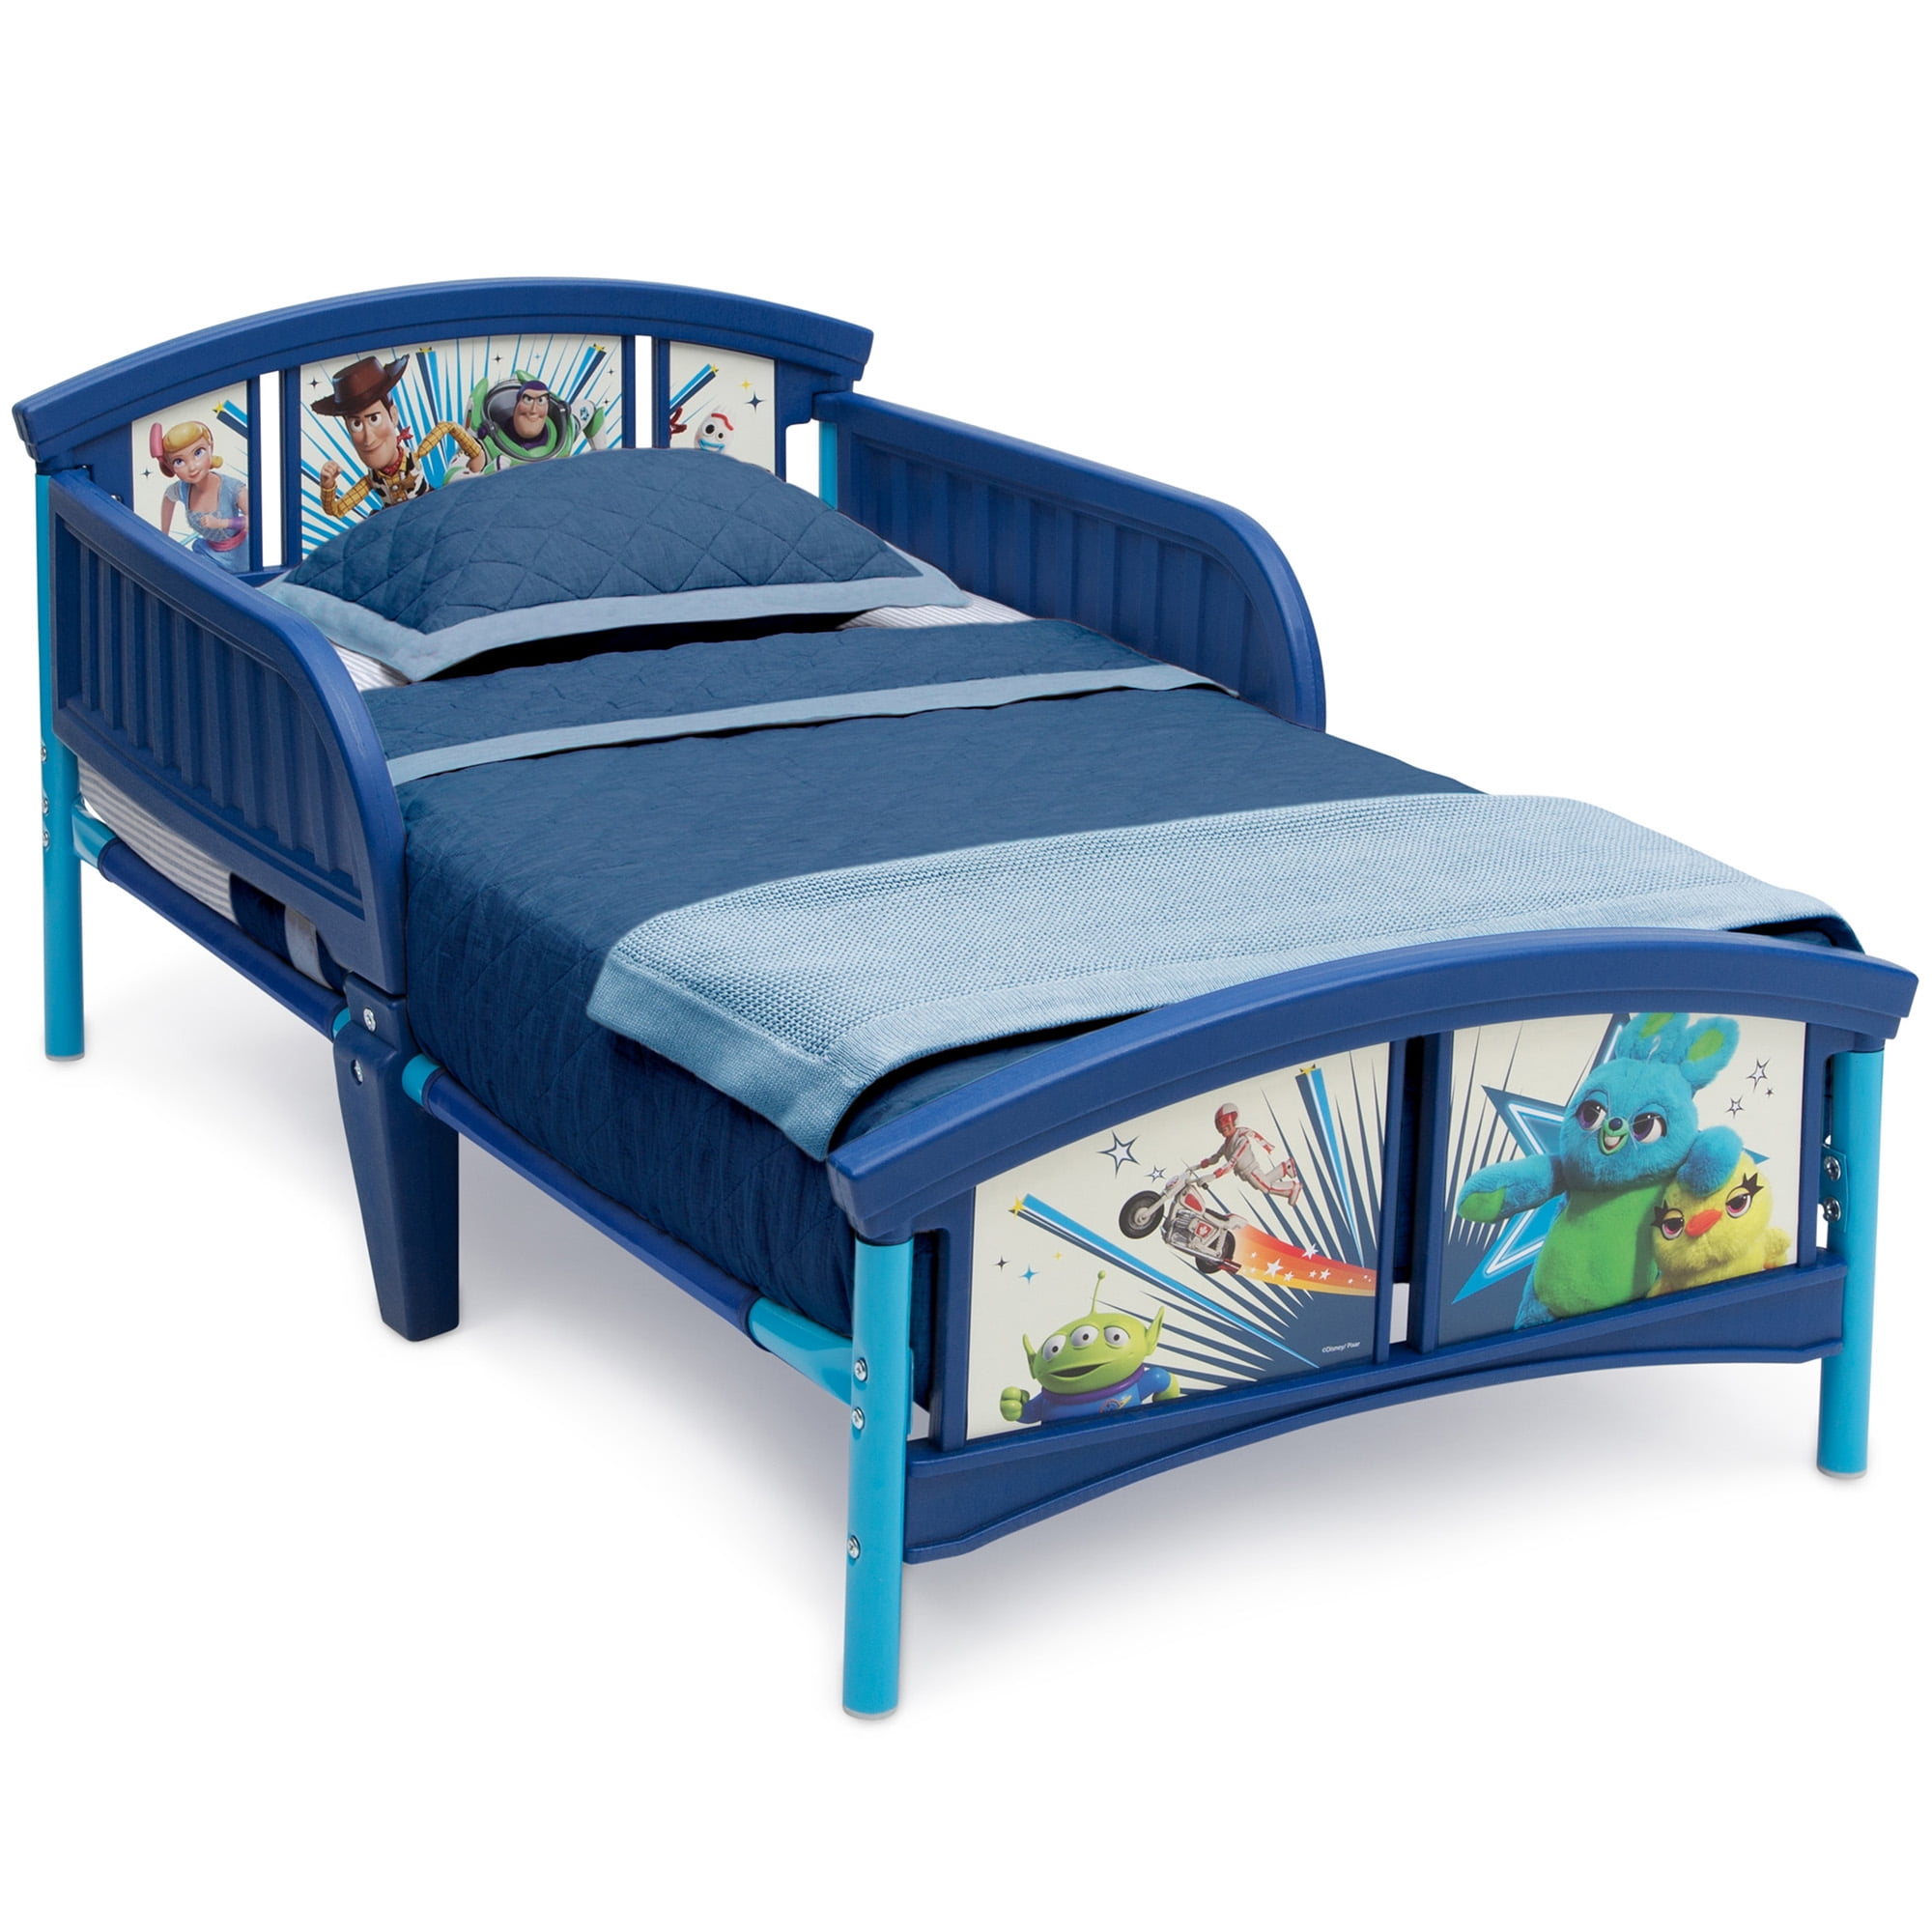 Disney/Pixar Toy Story 4 Plastic Toddler Bed by Delta Children